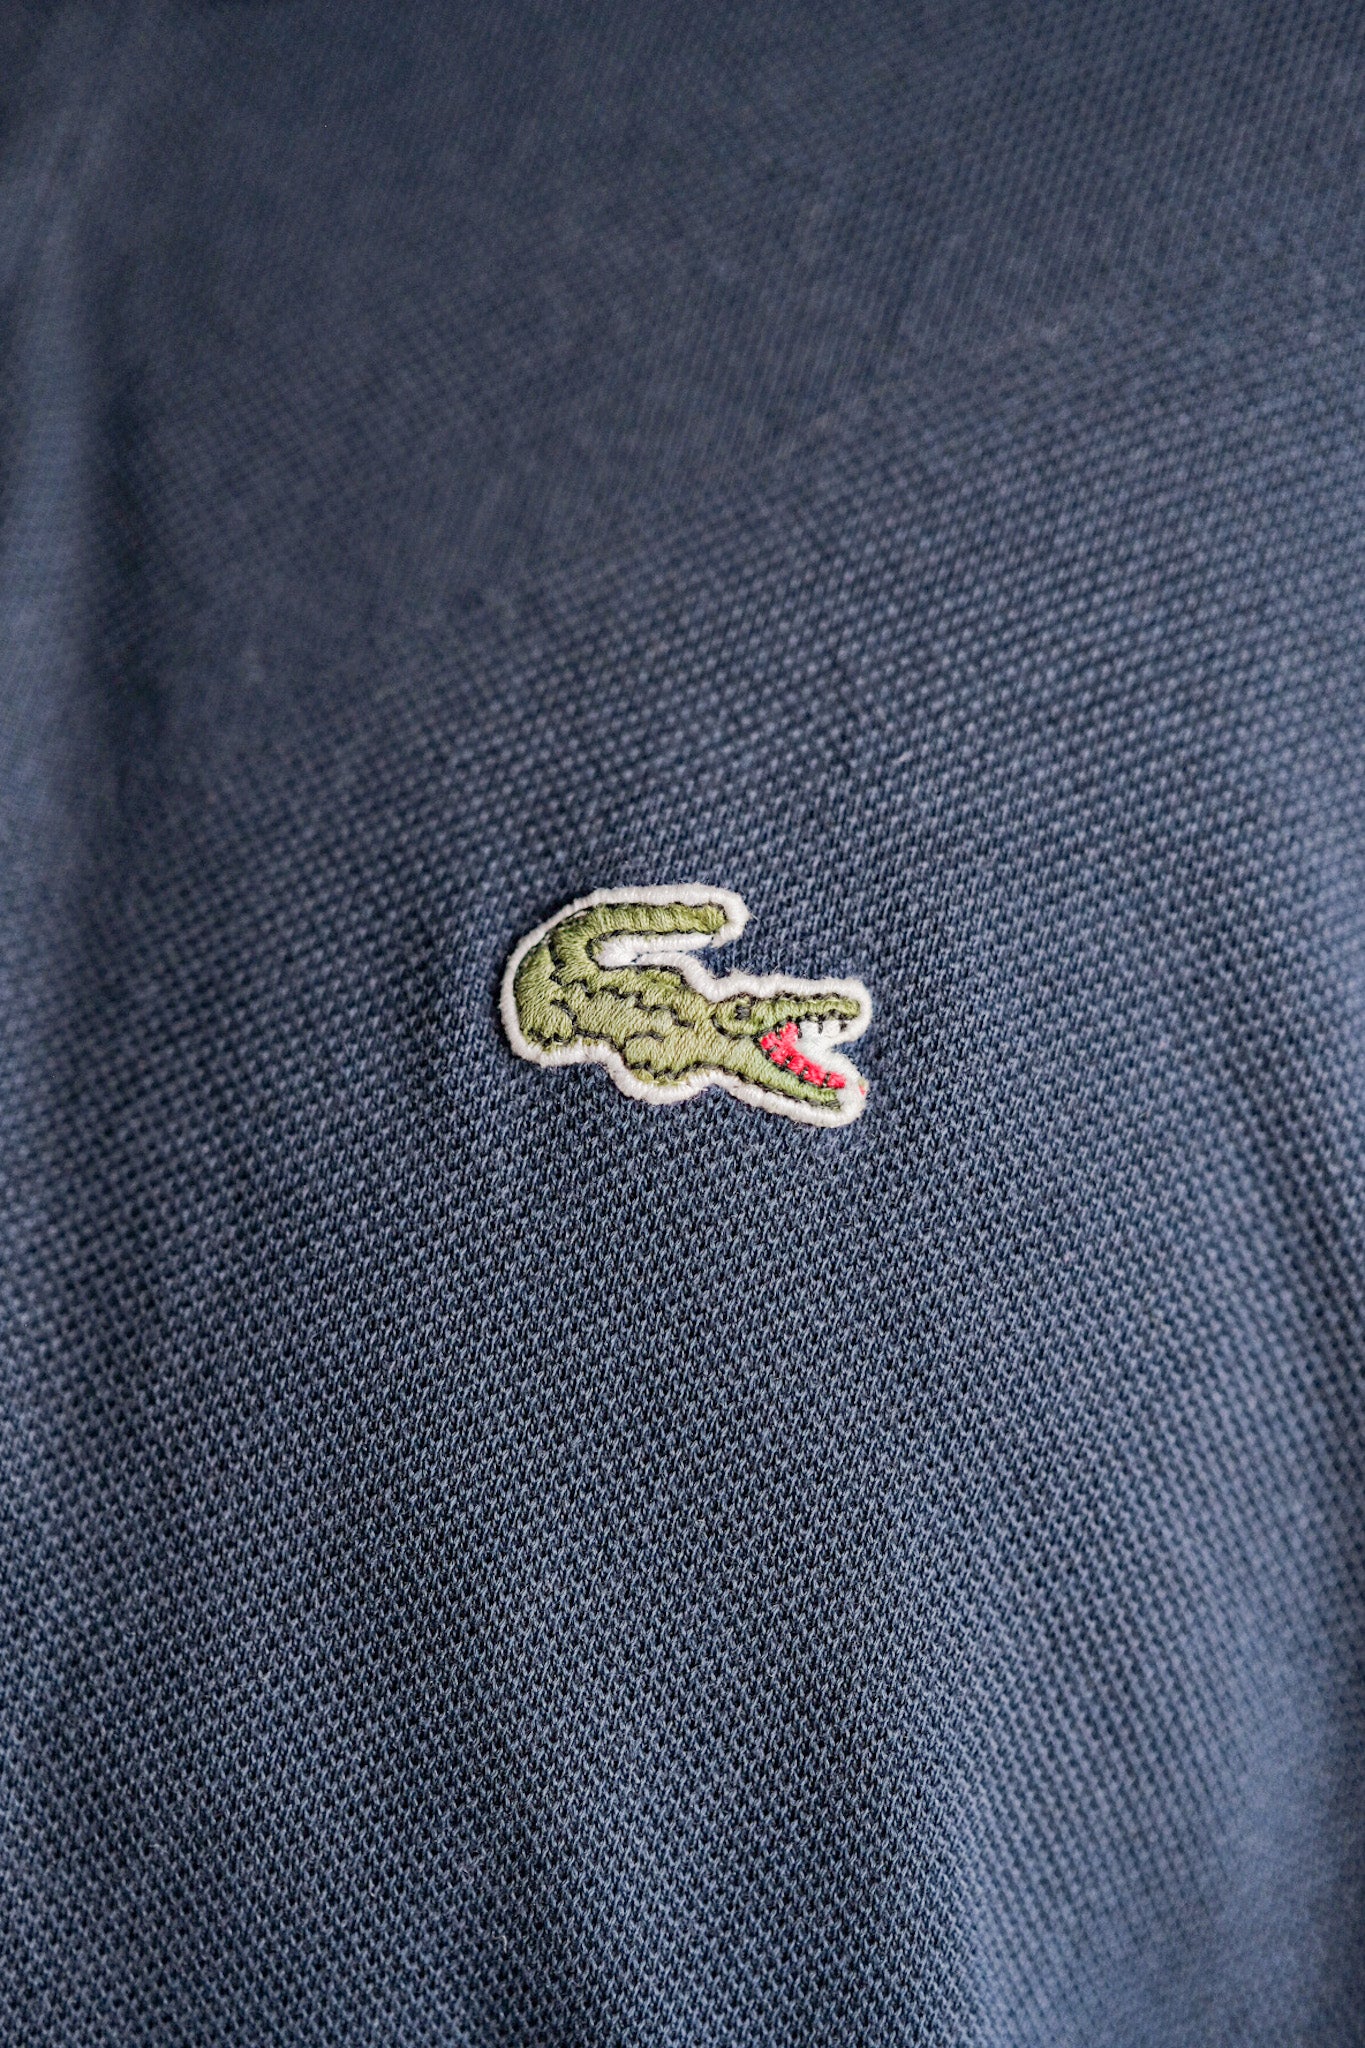 【~80's】CHEMISE LACOSTE L/S Polo Shirt Size.6 "Navy"